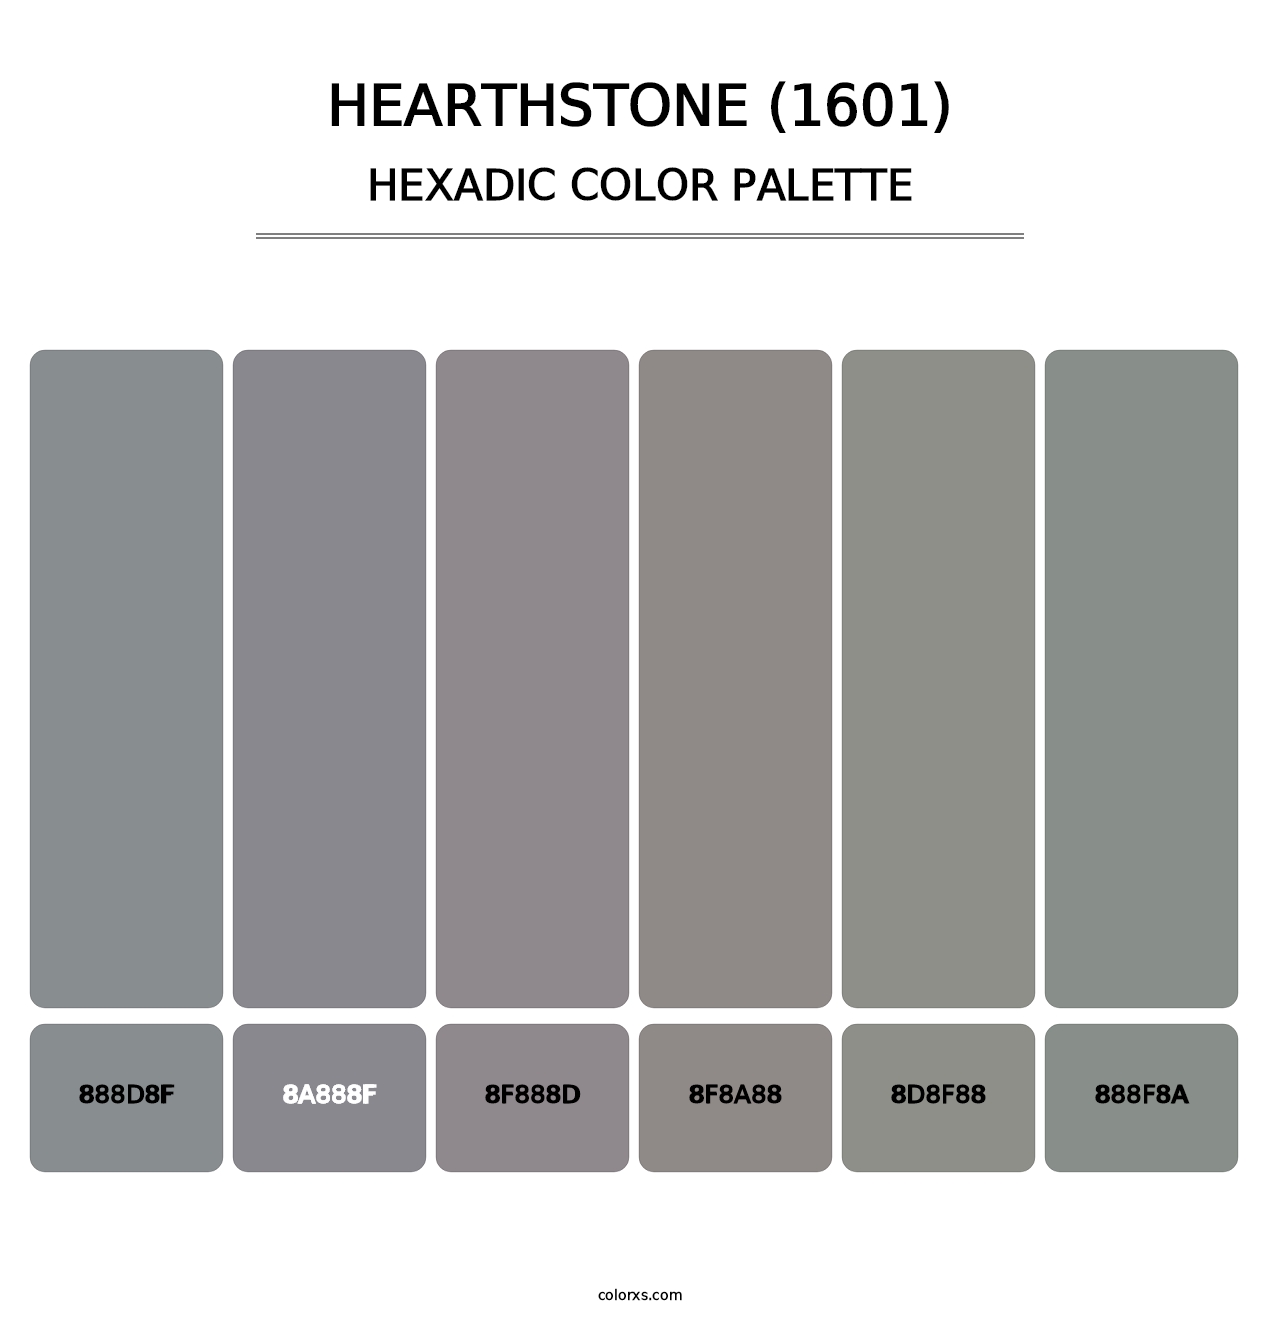 Hearthstone (1601) - Hexadic Color Palette